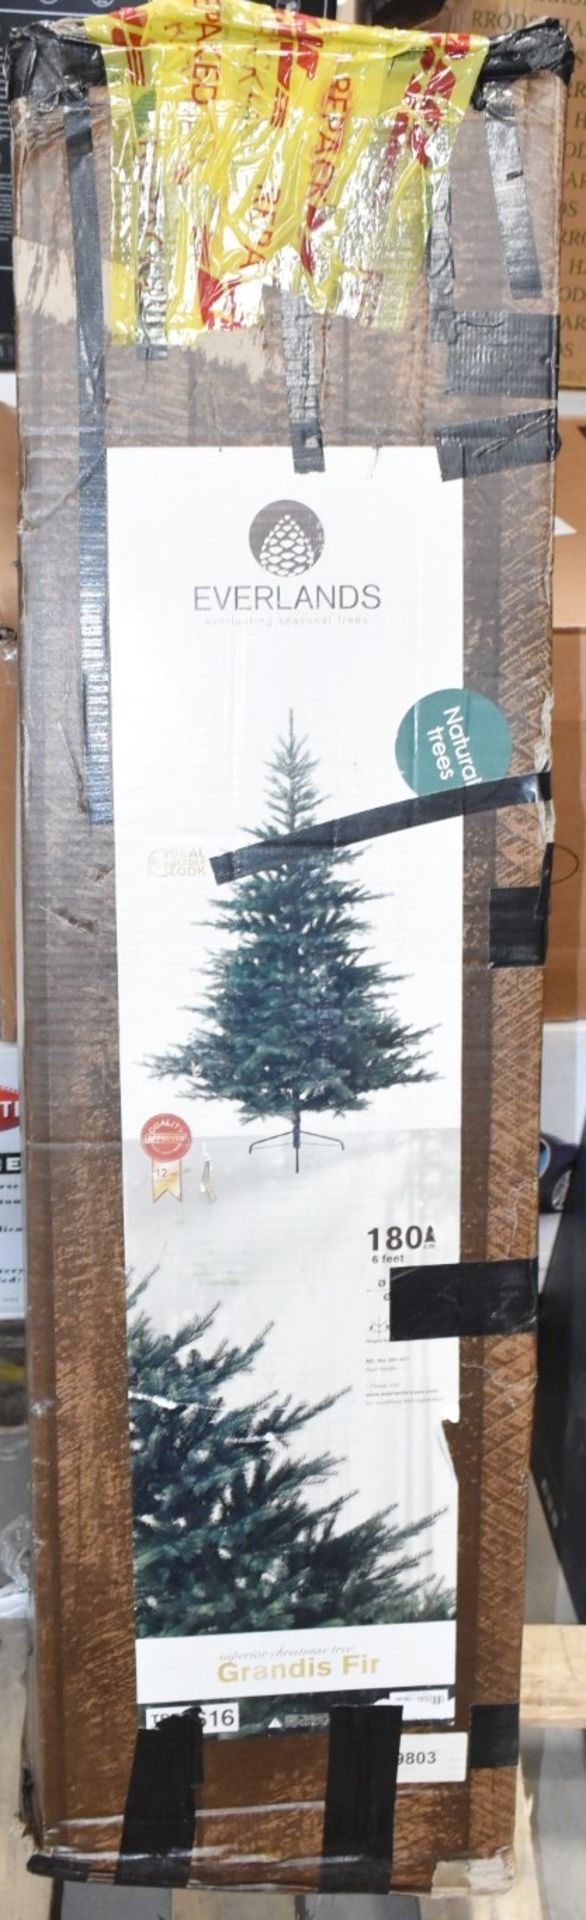 1 x EVERLANDS Green Grandis Fir Tree (6ft) - Original Price £329.99 - Ex-display / Boxed - Image 5 of 6